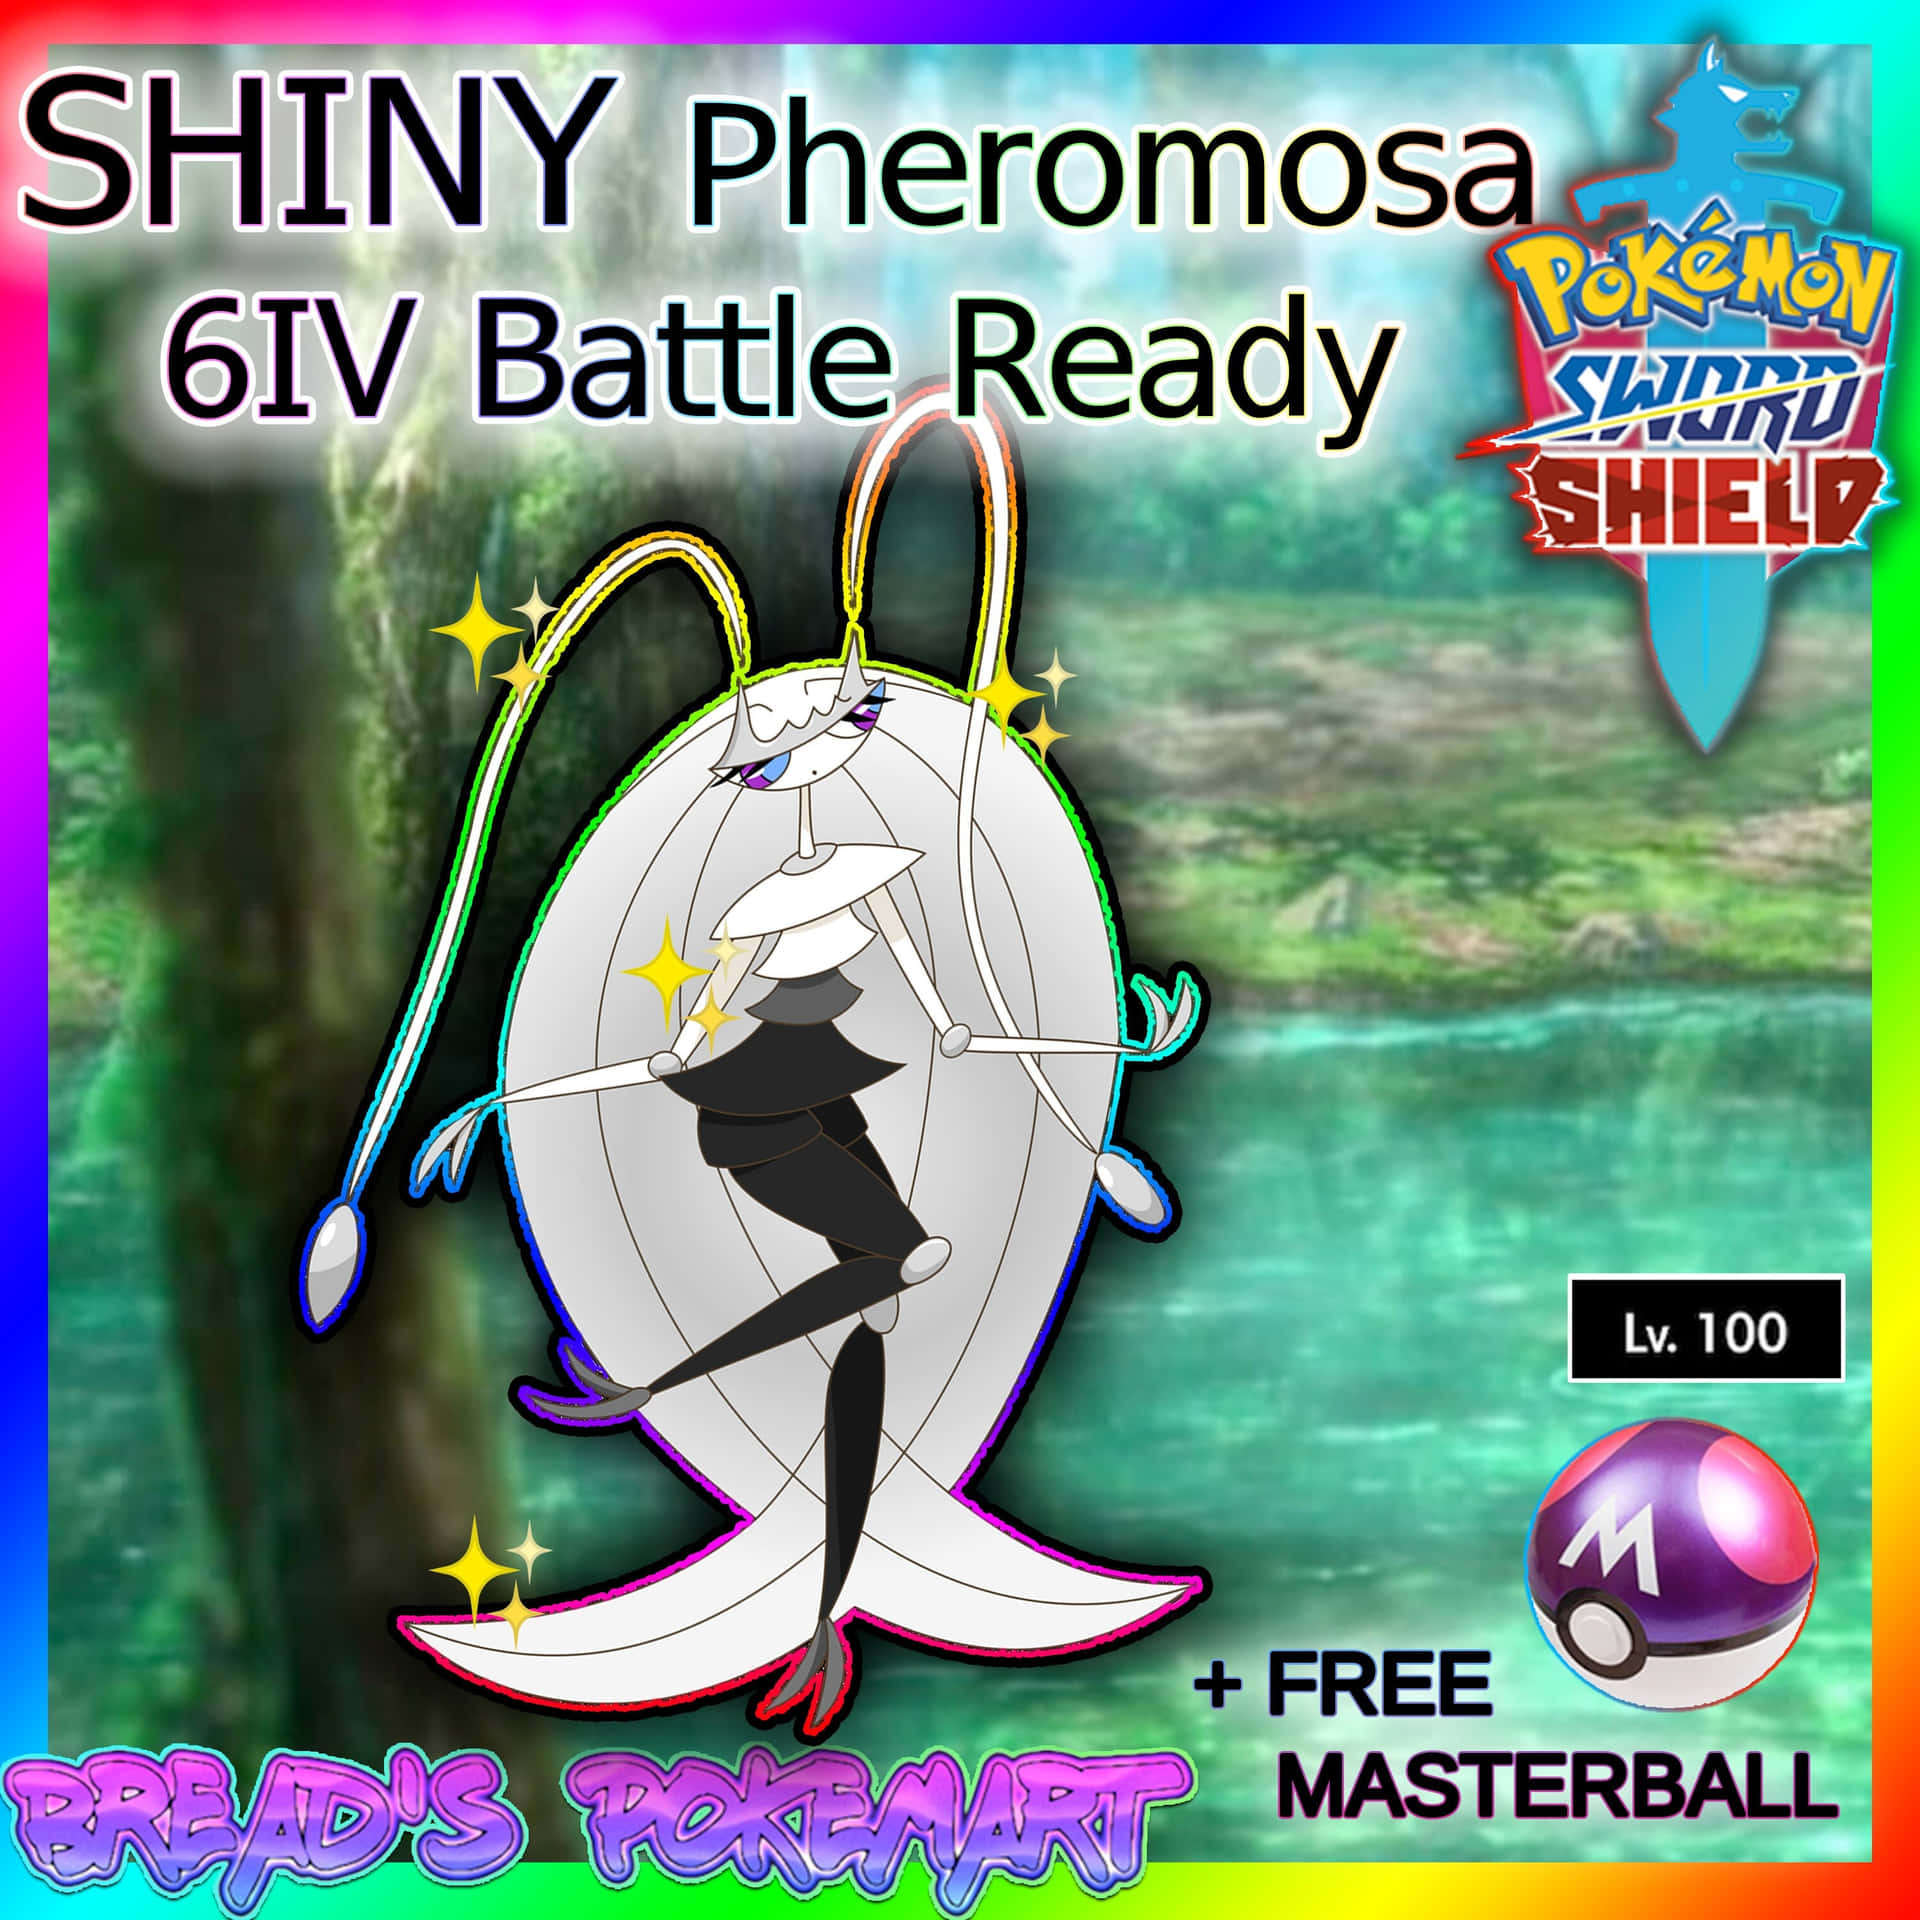 Battle-Ready Shiny Pheromosa Pokemon in Action Wallpaper